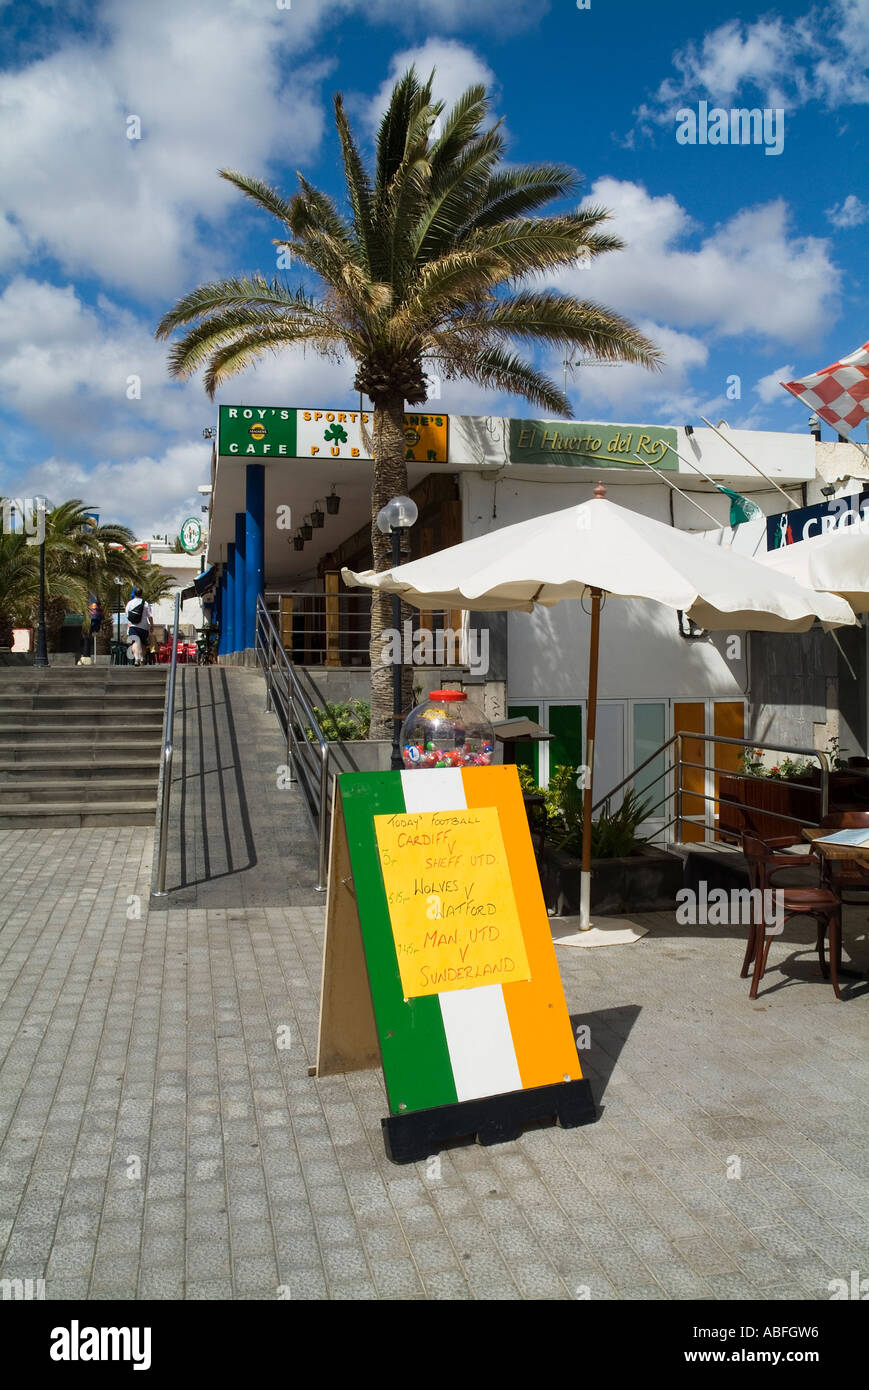 Puerto del carmen lanzarote irish hi-res stock photography and images -  Alamy